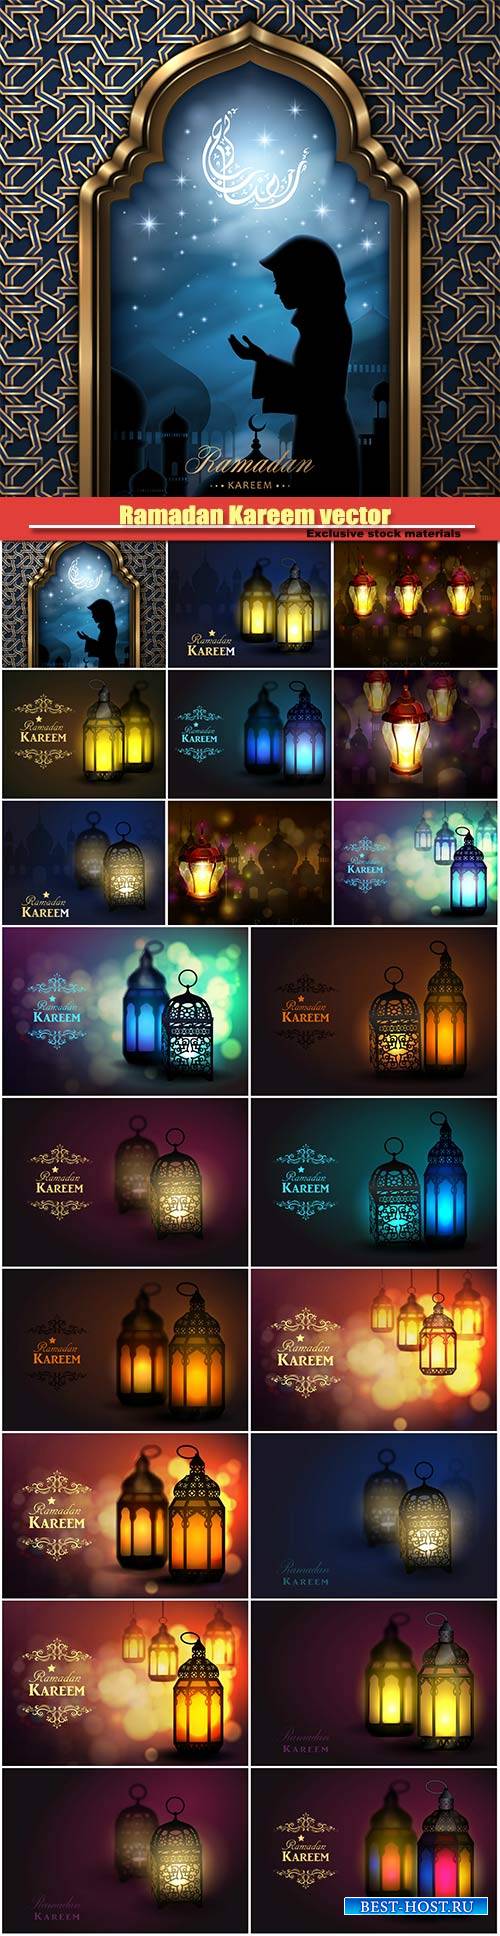 Arabic lamps with lights for Ramadan Kareem vector